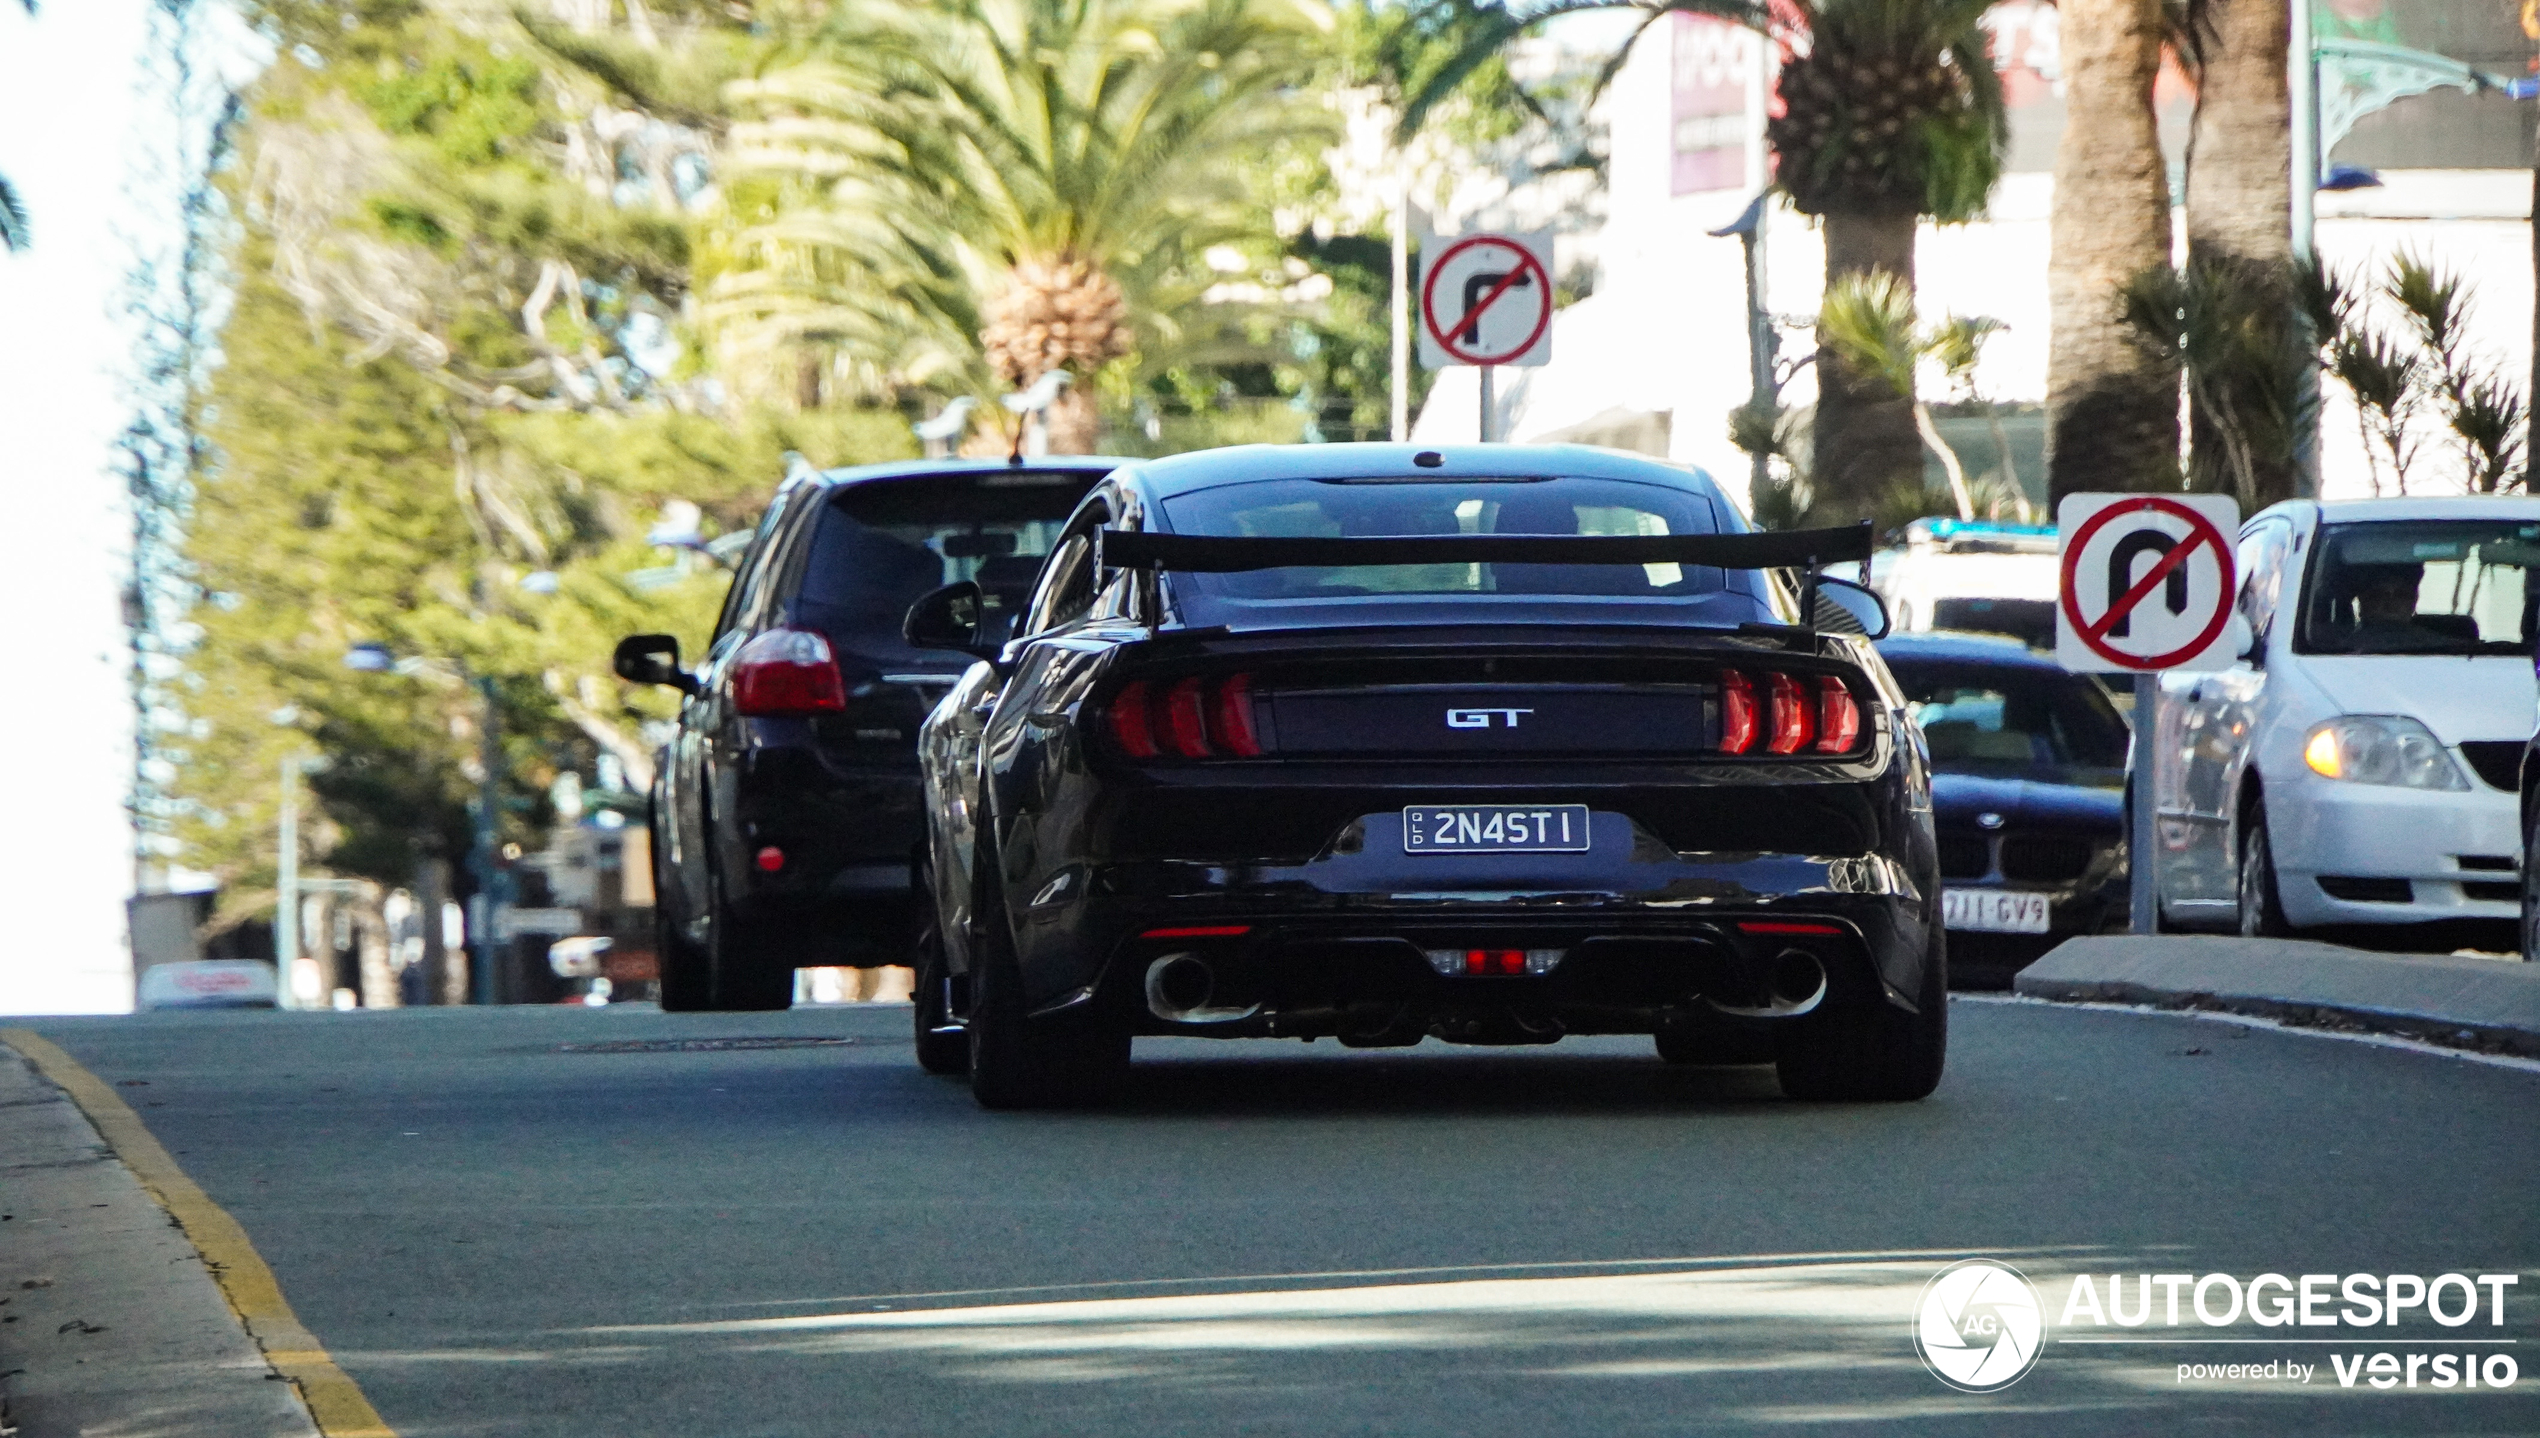 Mustang GT in Australië is op de perfecte plek gespot